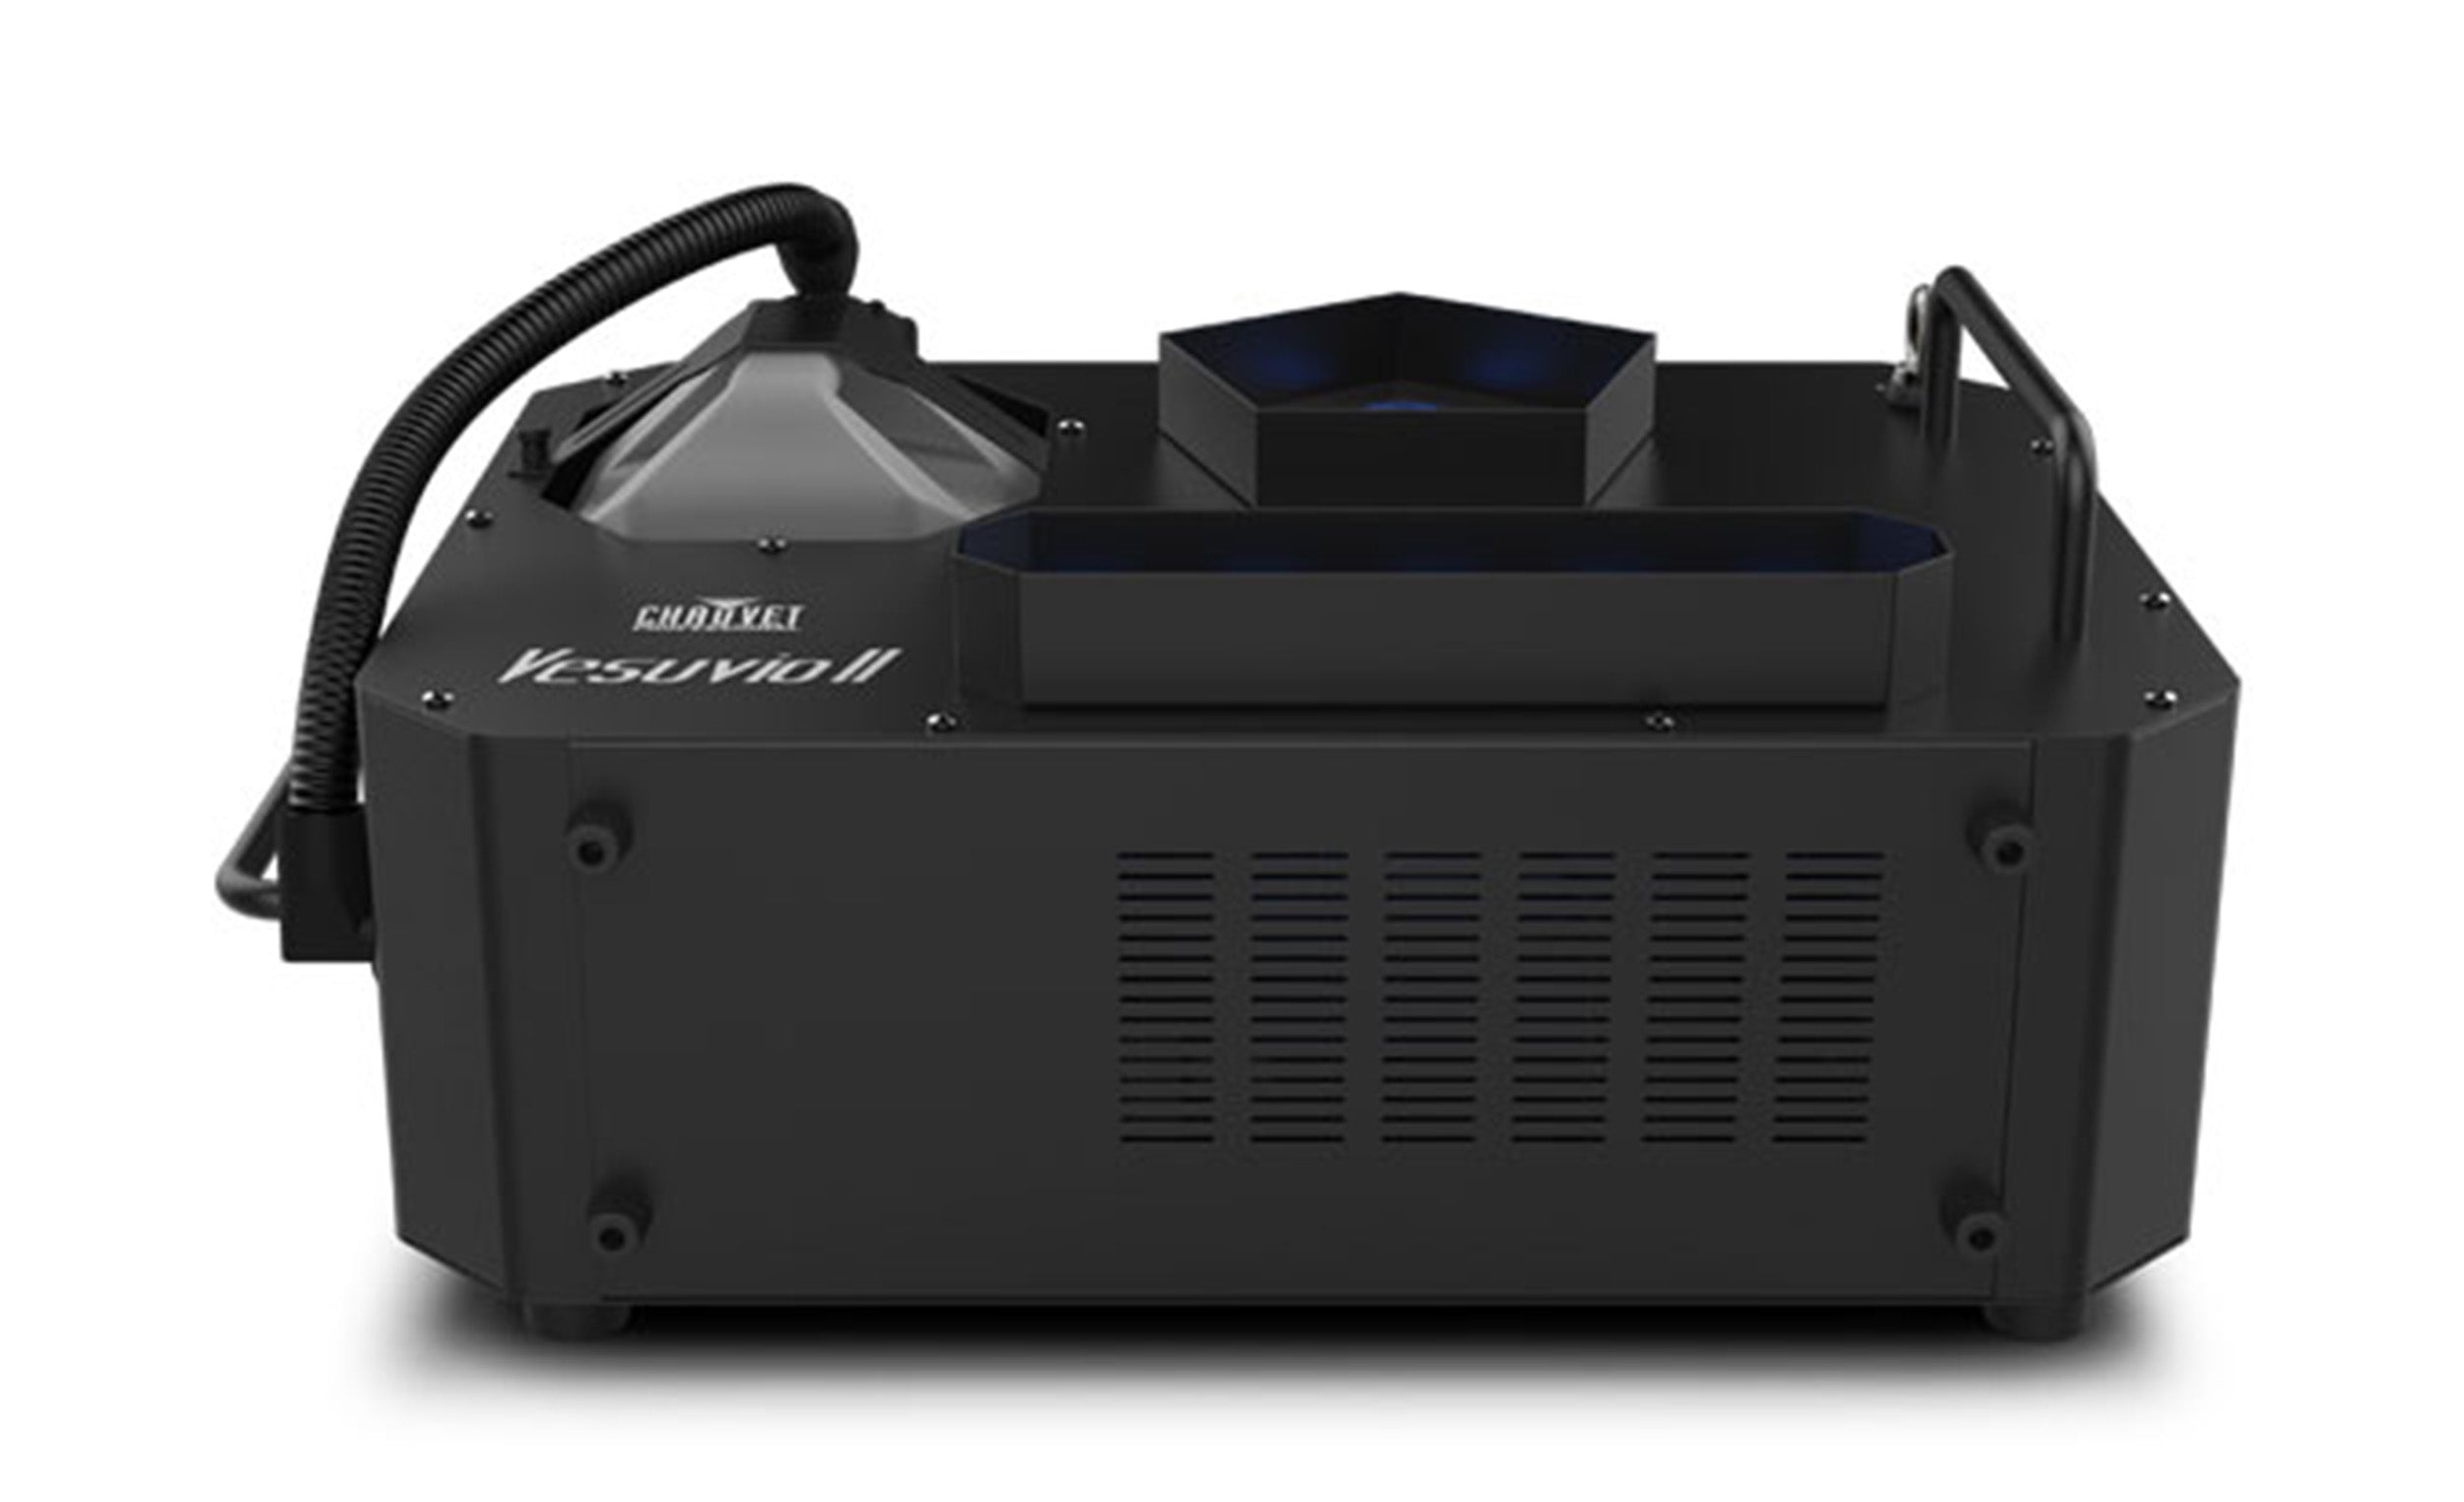 Chauvet Pro Vesuvio II RGBA+UV LED Illuminated Fog Machine - Hollywood DJ